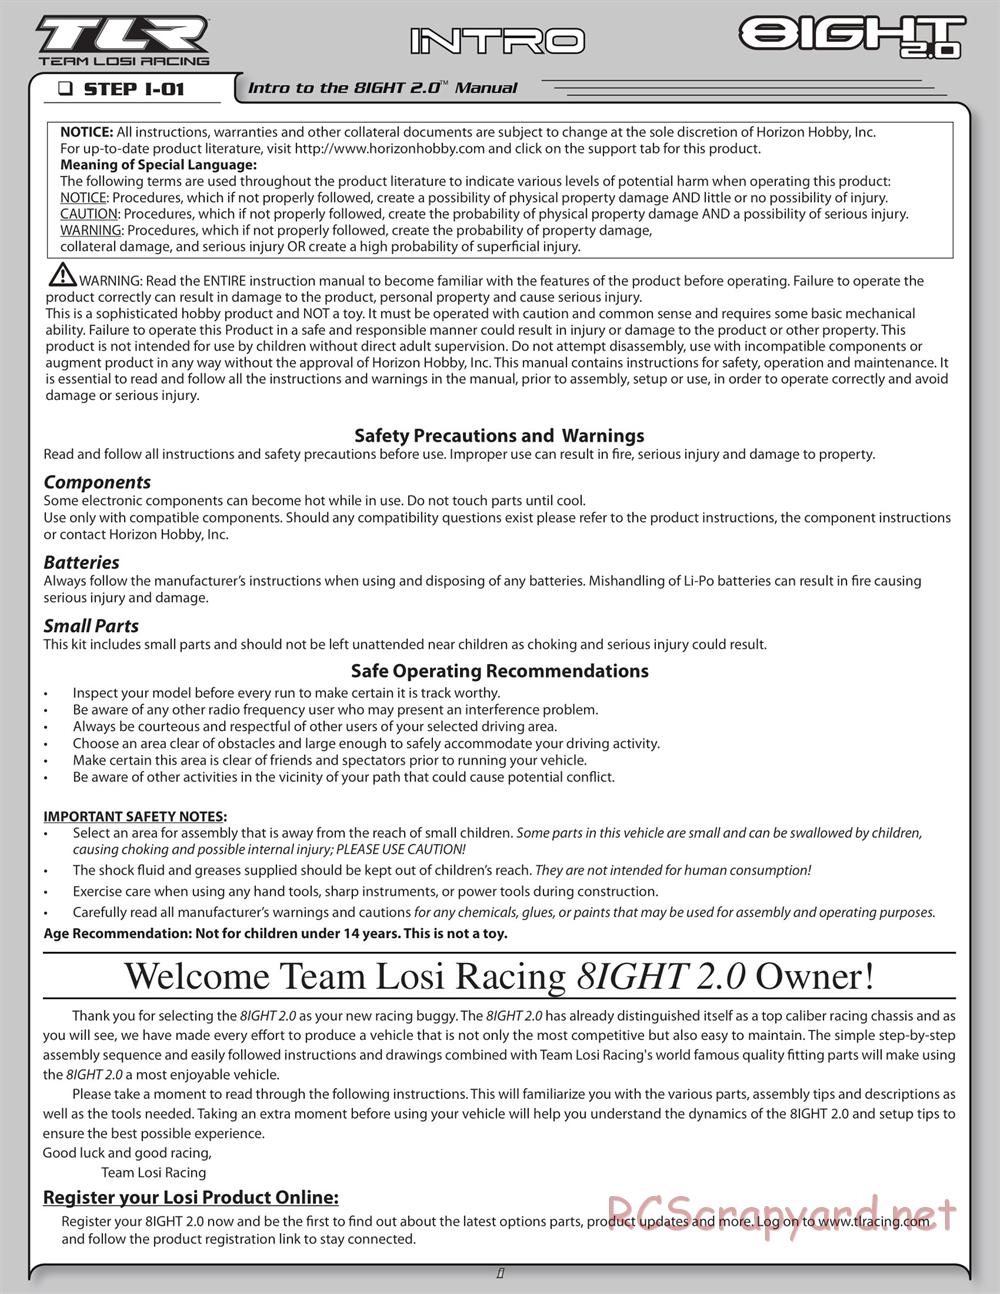 Team Losi - 8ight 2.0 - Manual - Page 2